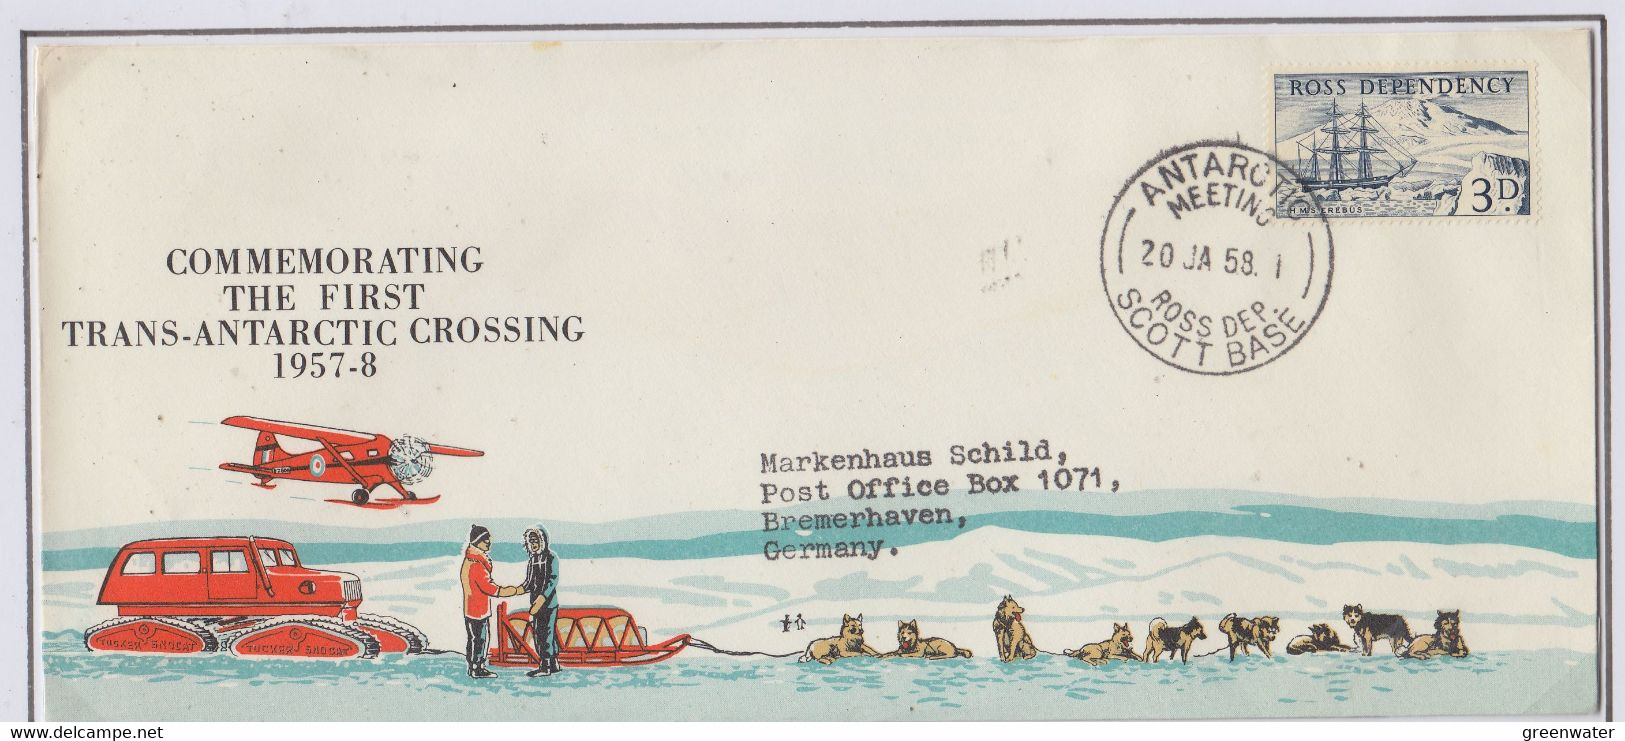 Ross Dependency 1958 Commemorating 1st Trans-Antarctic Crossing Cover Ca Scott Base 20 JA 58 (BO167) - Briefe U. Dokumente